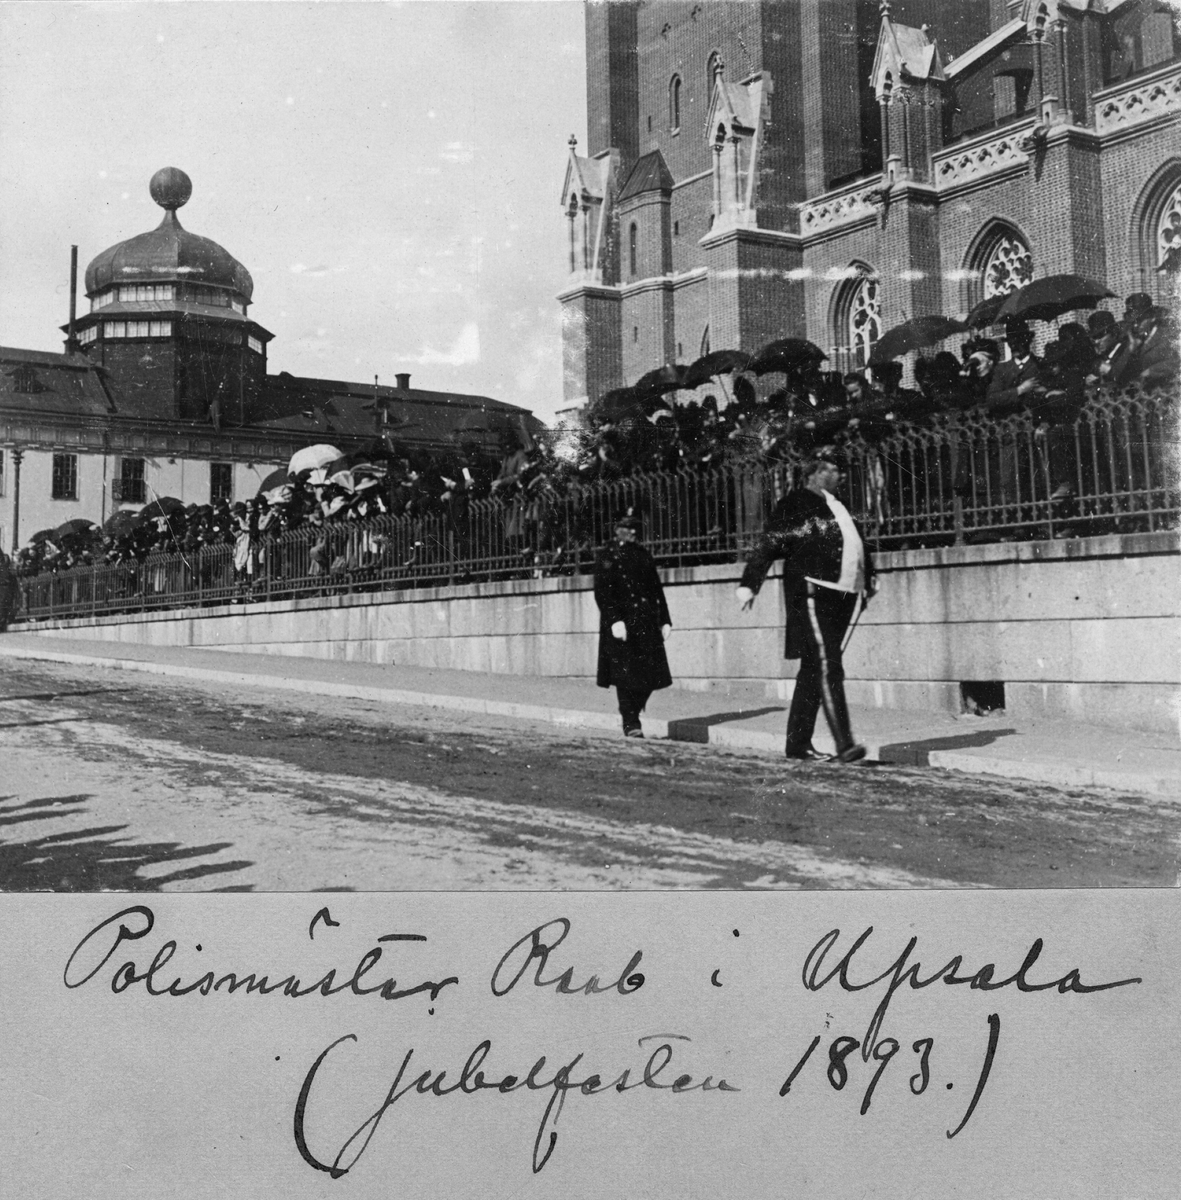 "Polismästar Raab i Upsala, jubelfesten 1893", Uppsala